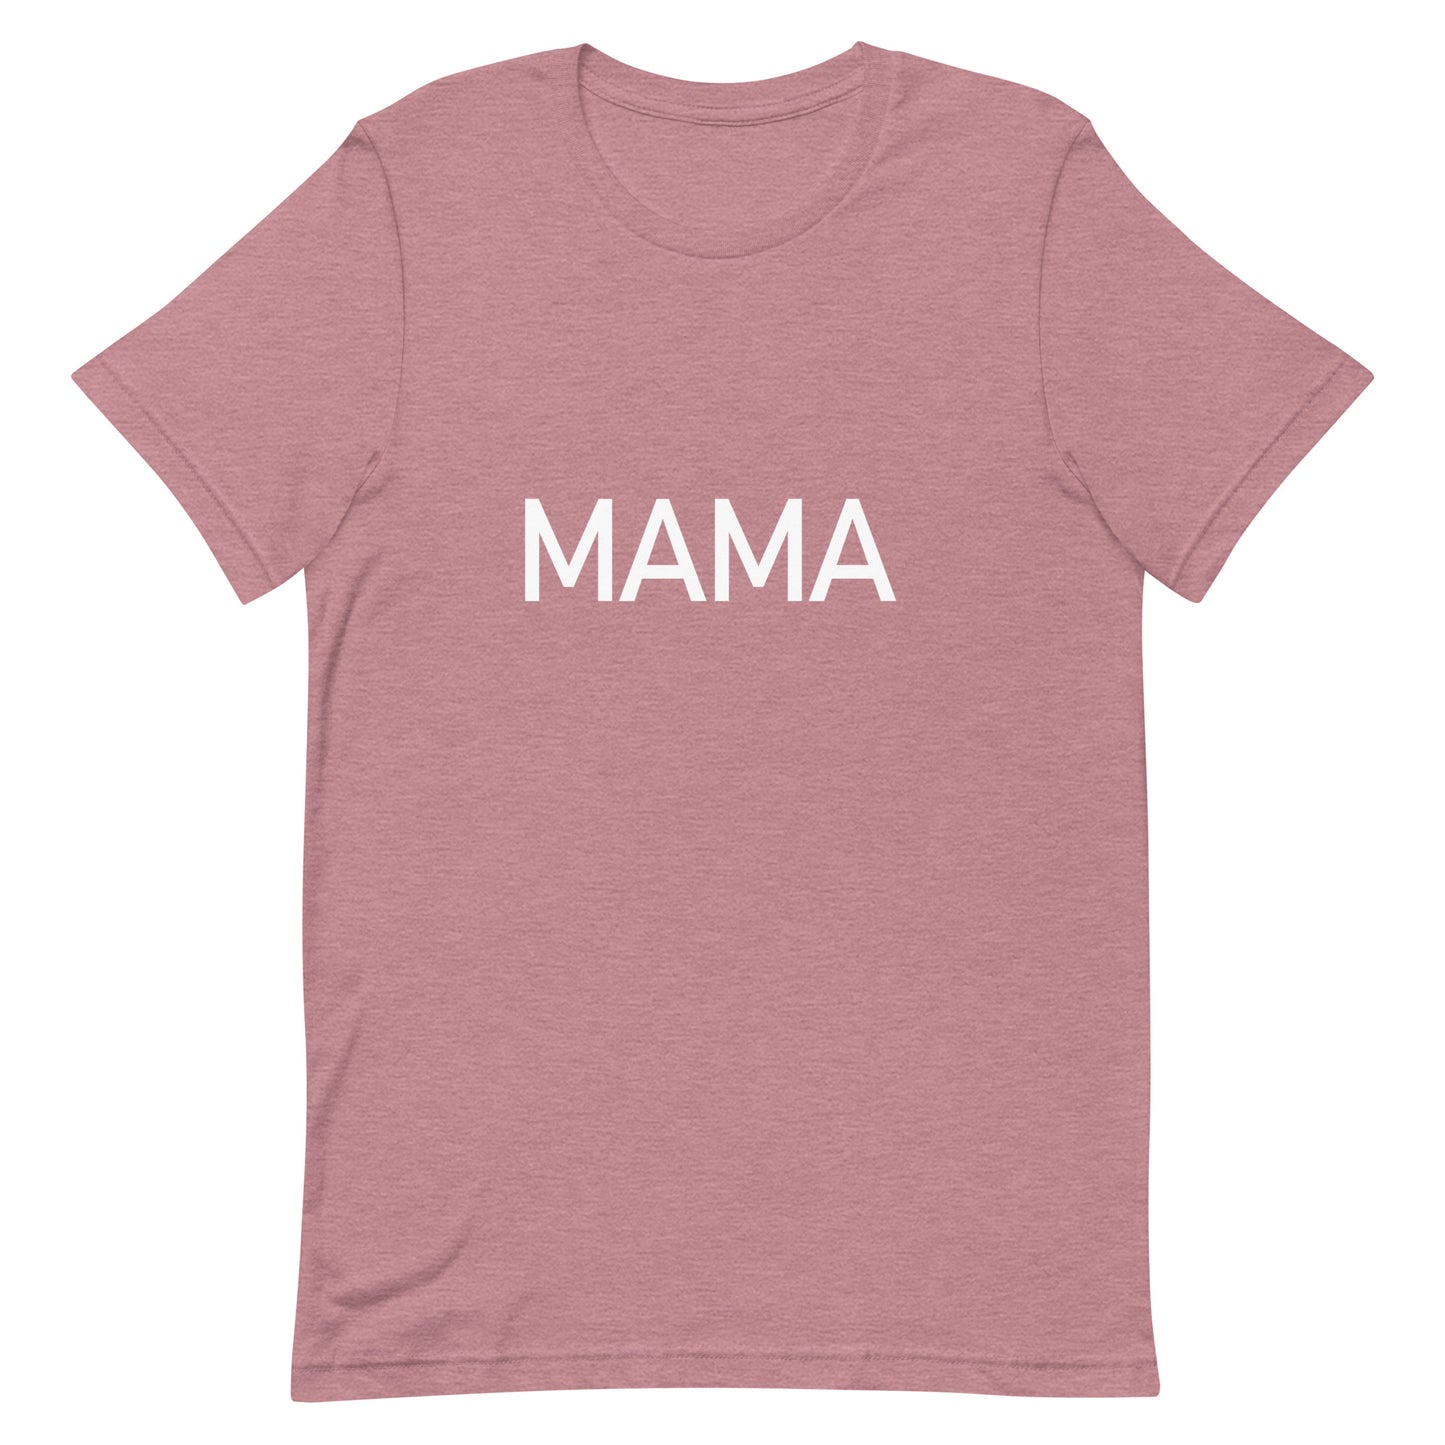 Mama White - Sustainably Made Women’s Short Sleeve Tee